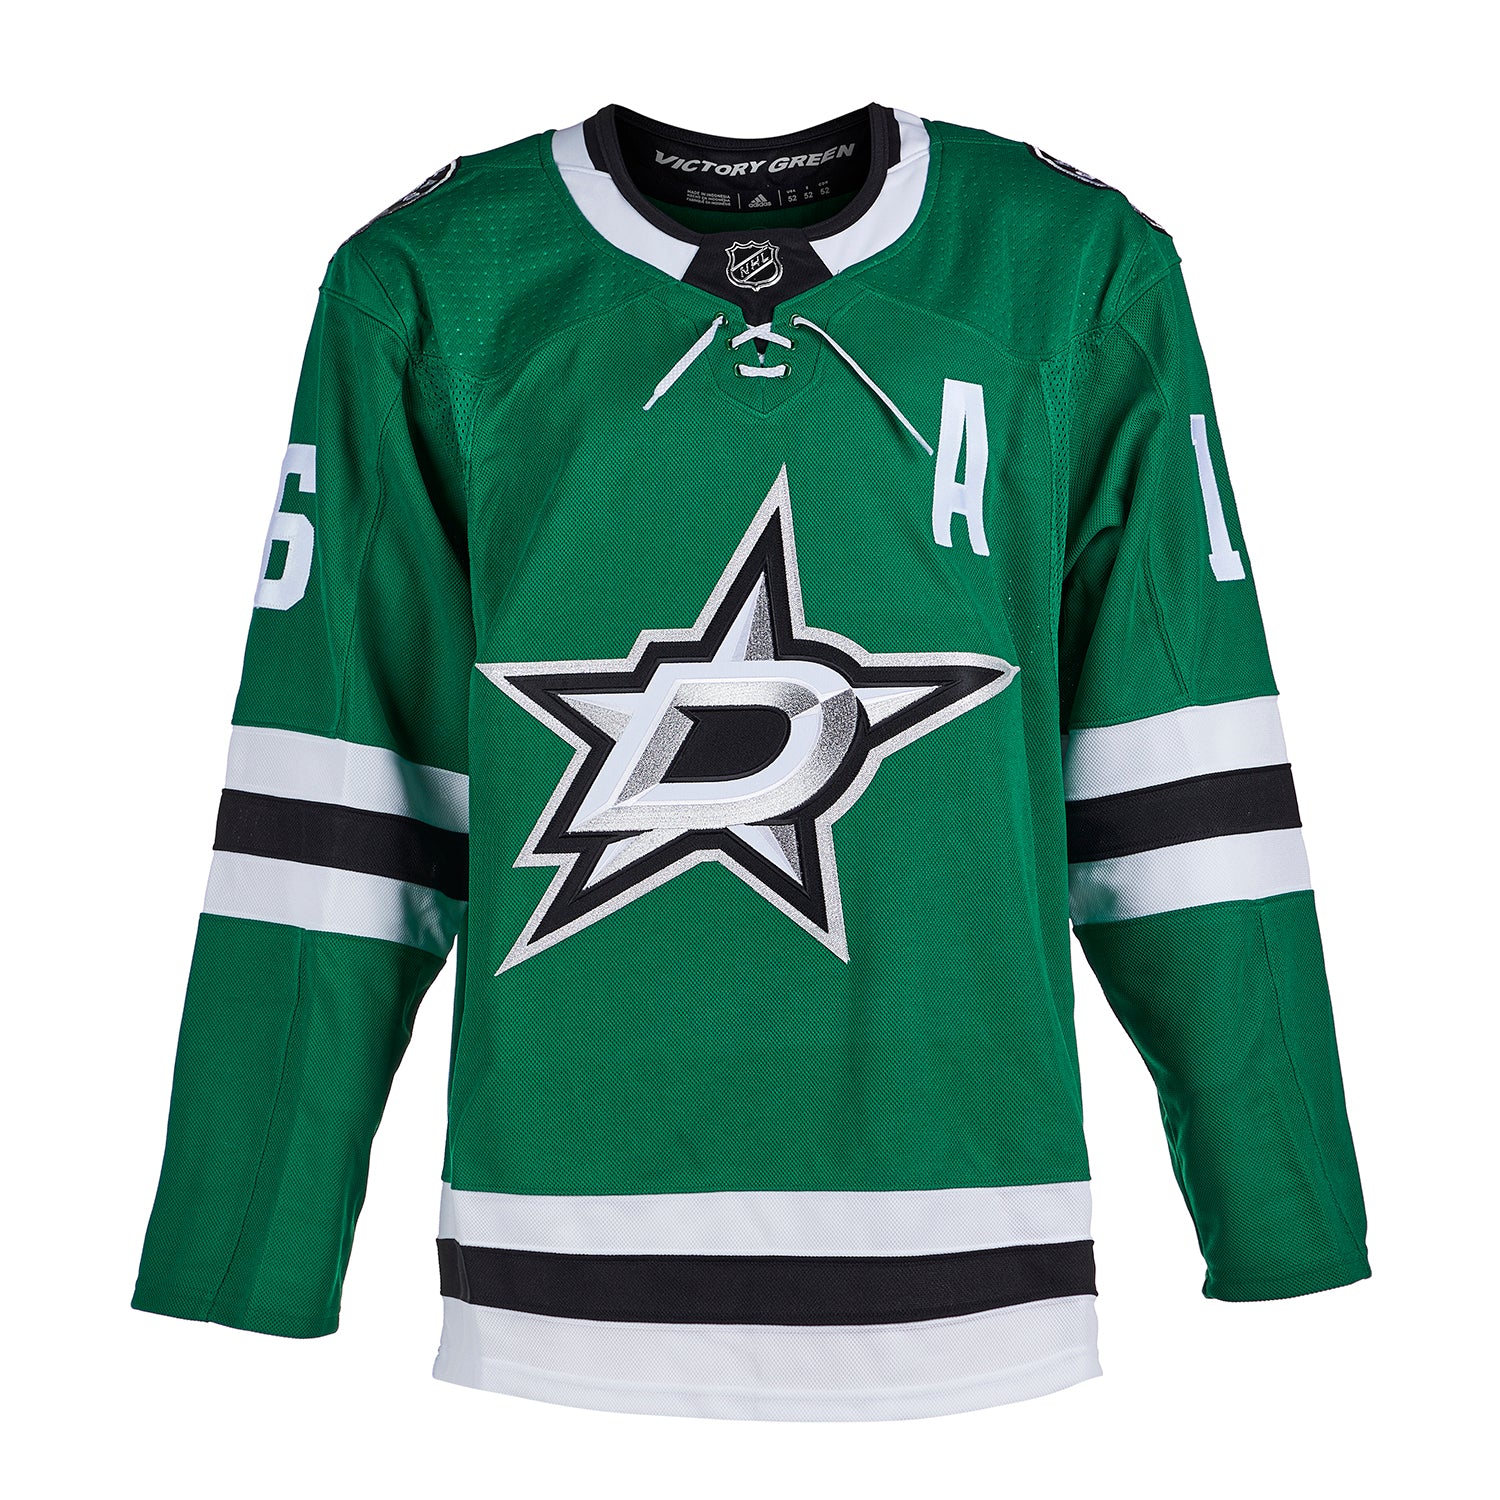 Joe Pavelski Dallas Stars Autographed Green Adidas Authentic Jersey